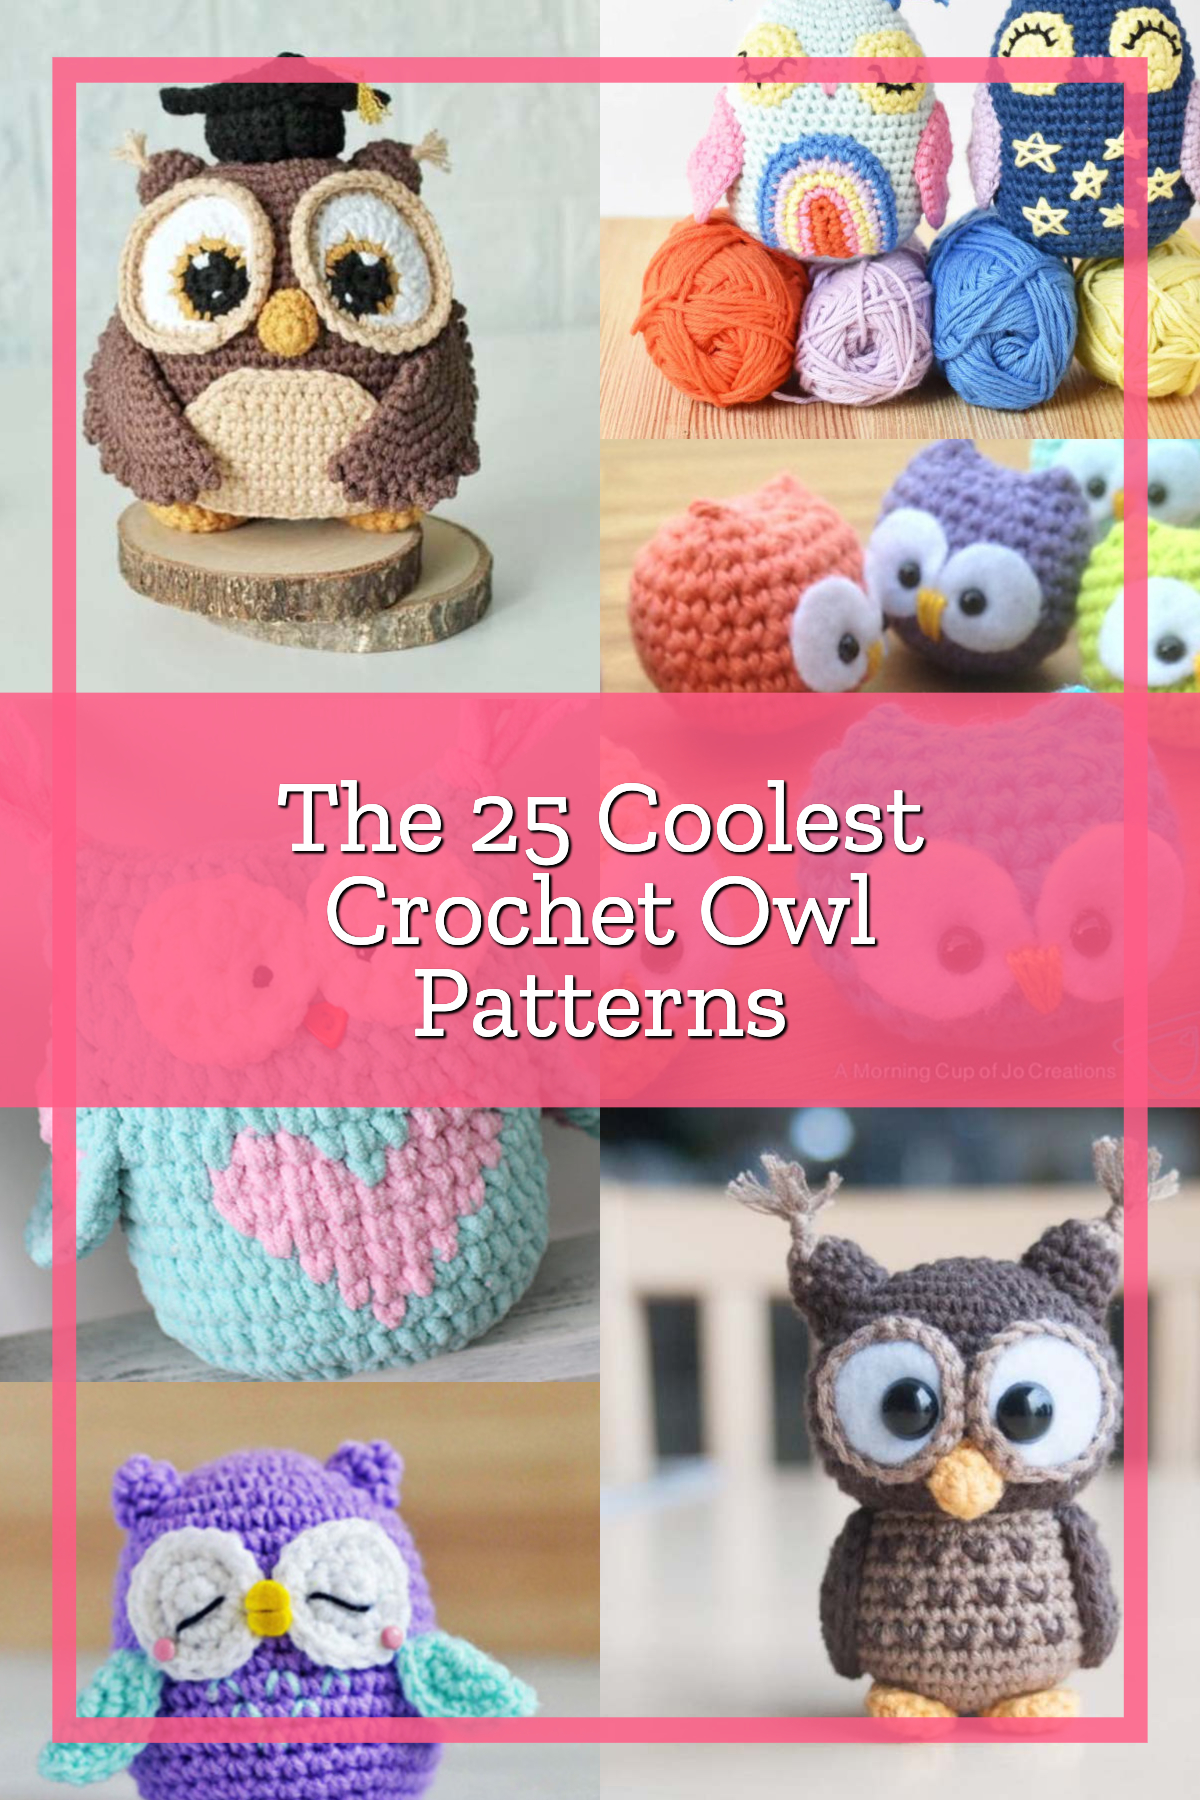 The 9 Coolest Crochet Owl Patterns